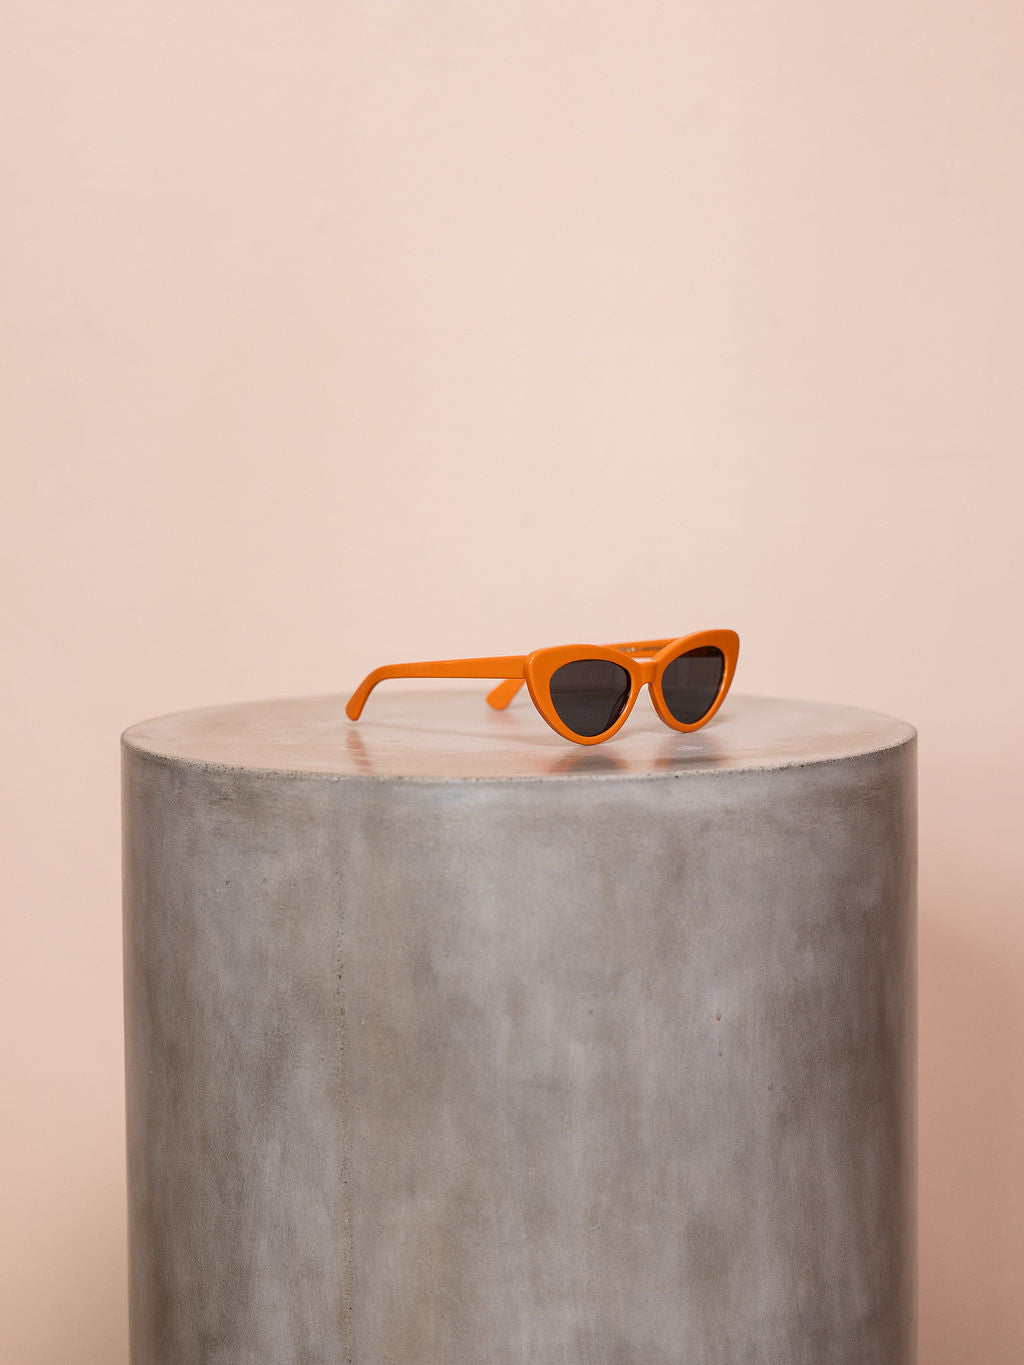 Orange sunglasses on podium against pink background